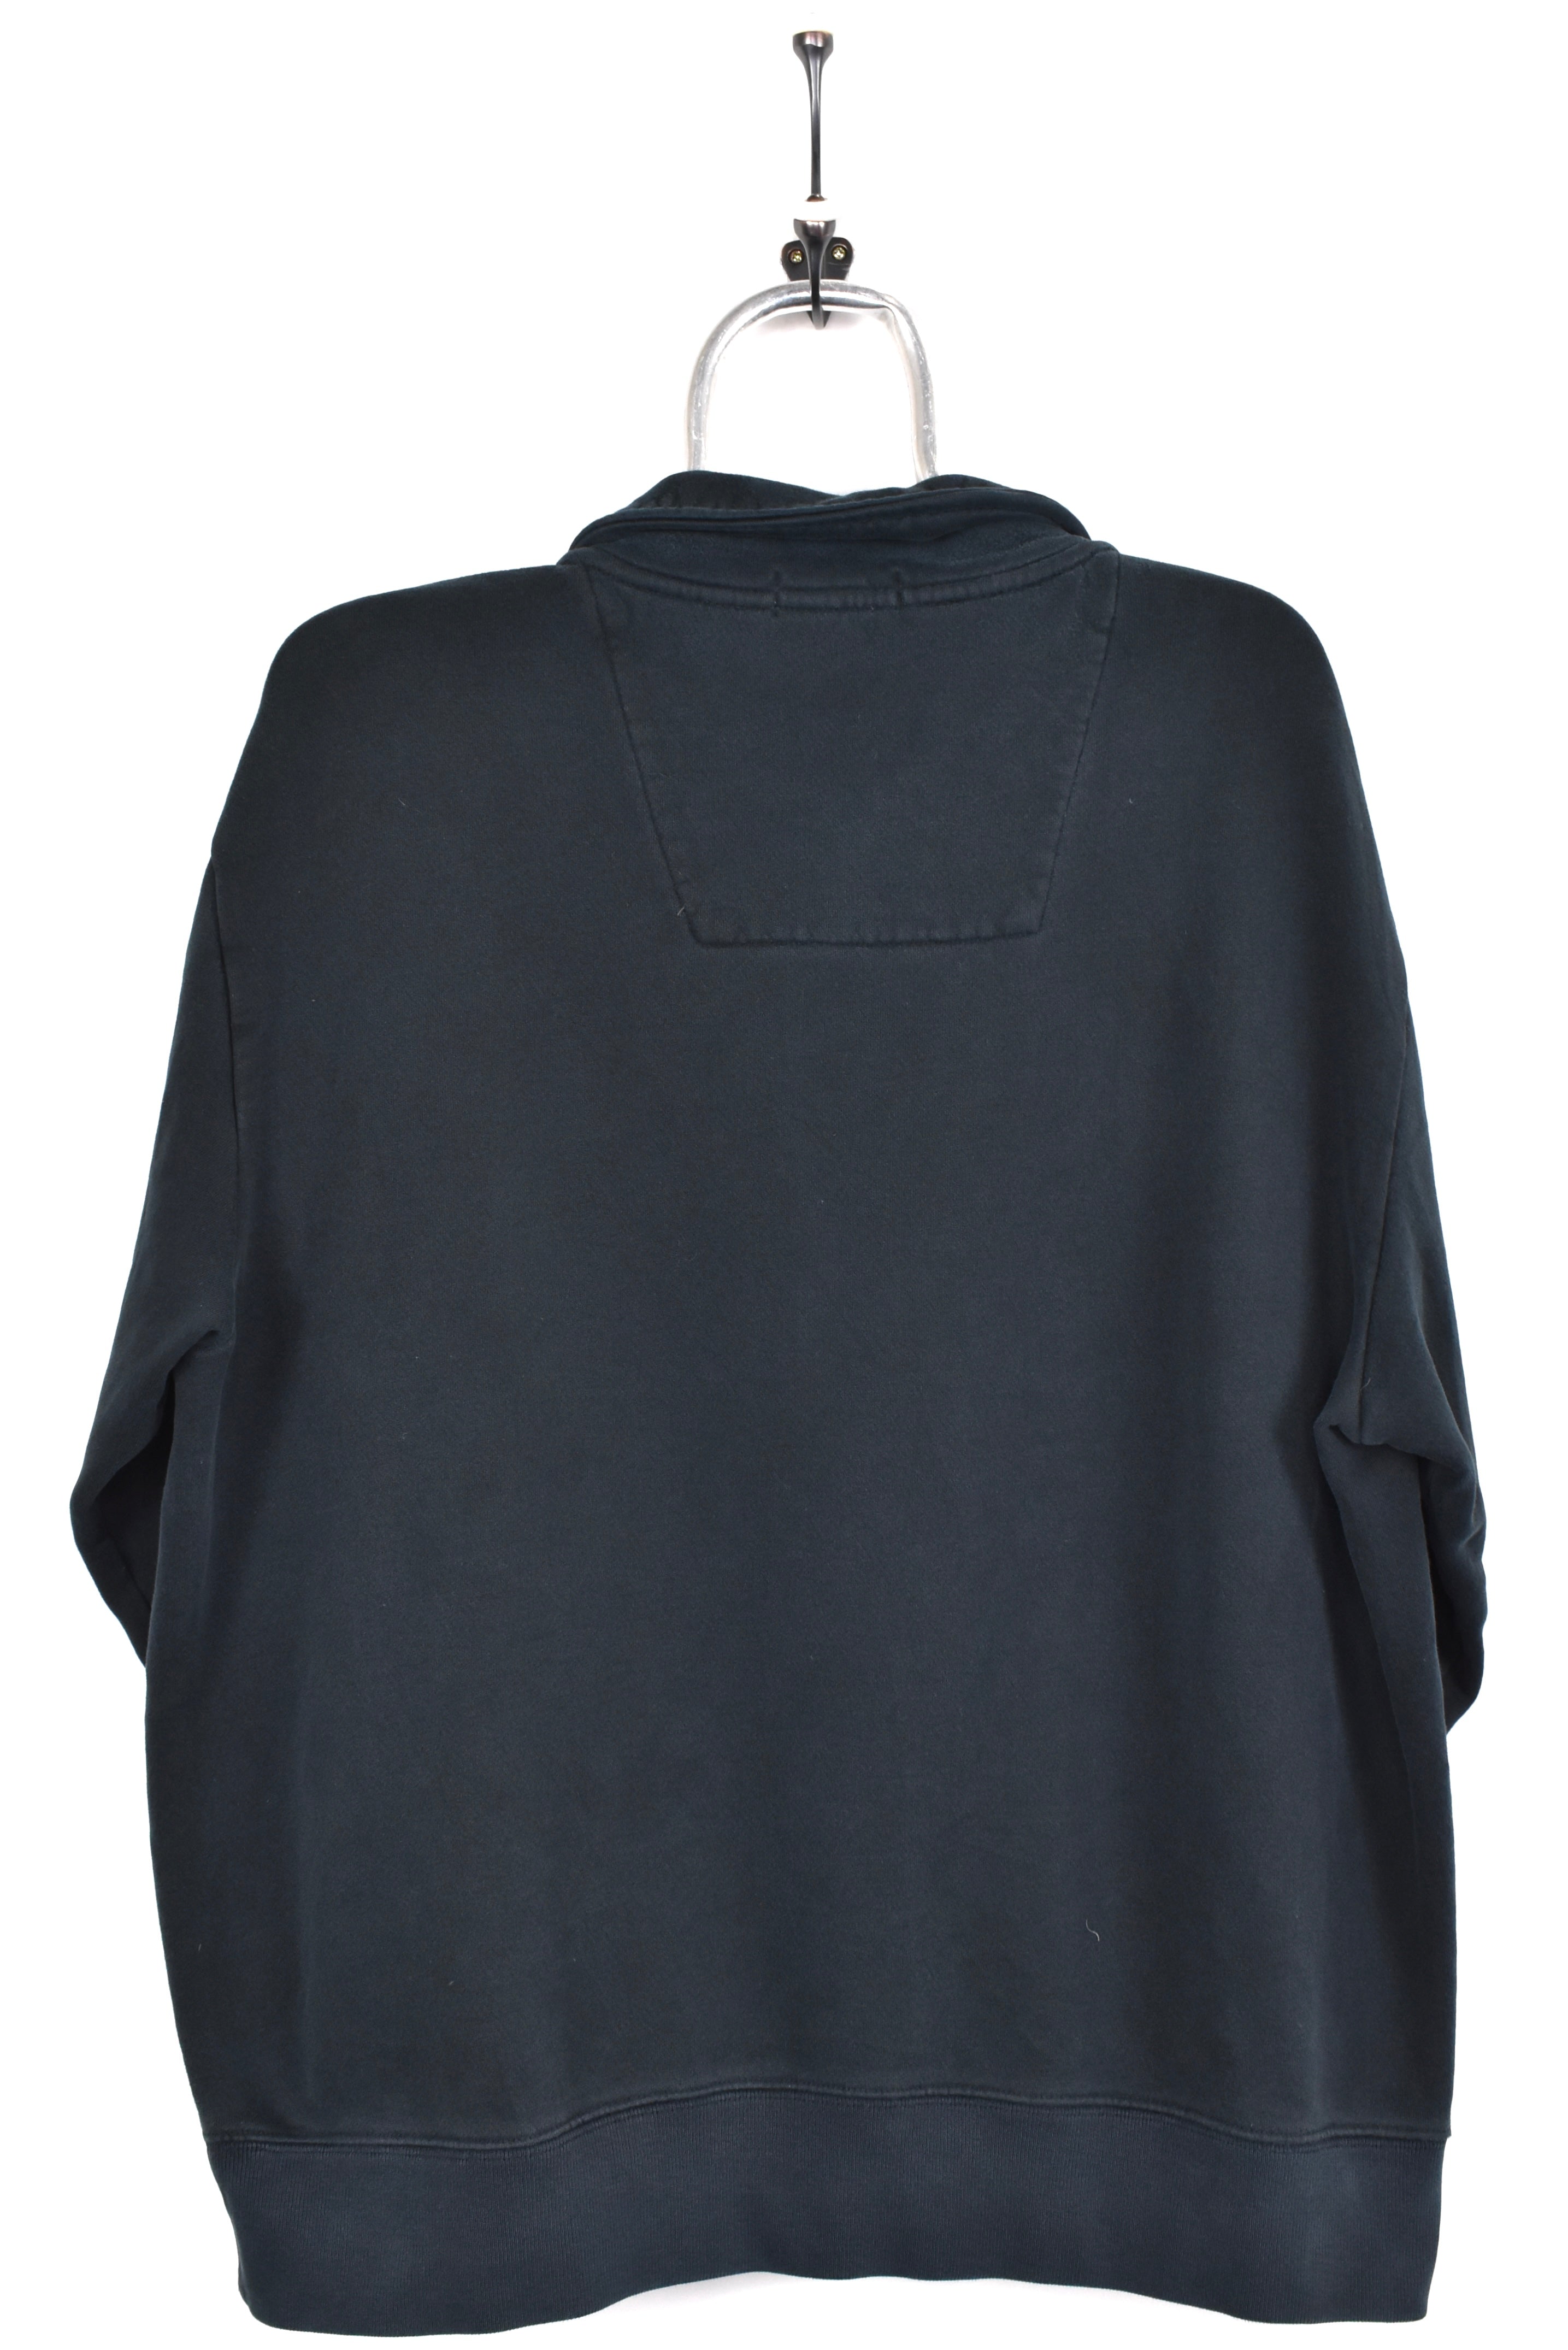 Vintage Nautica sweatshirt, black embroidered 1/4 zip jumper - AU L NAUTICA